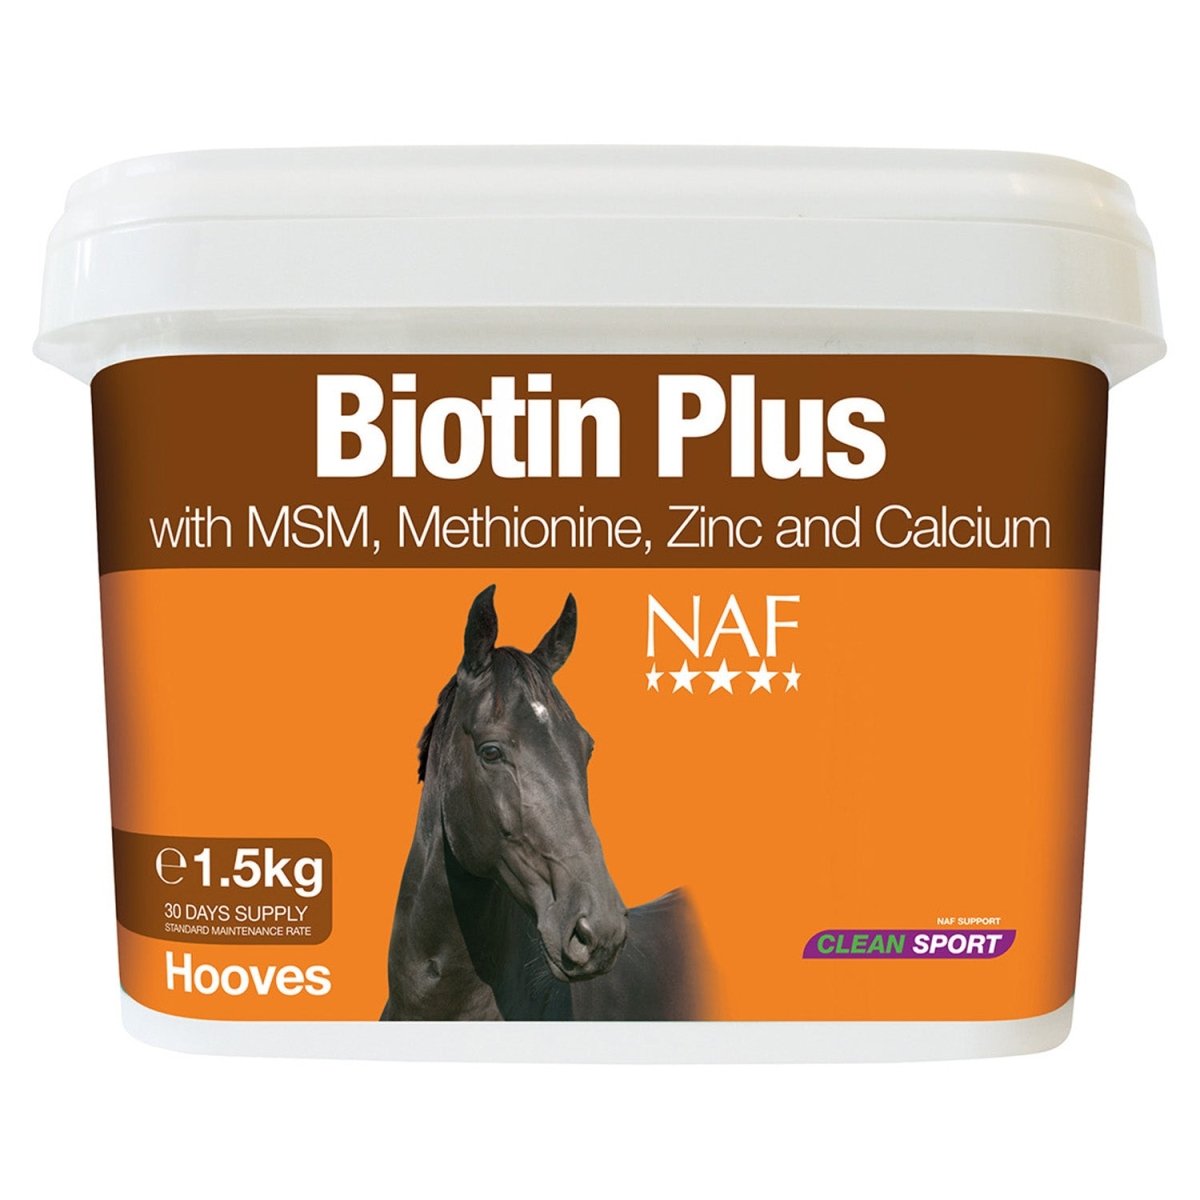 Naf Biotin Plus - 1.5Kg -